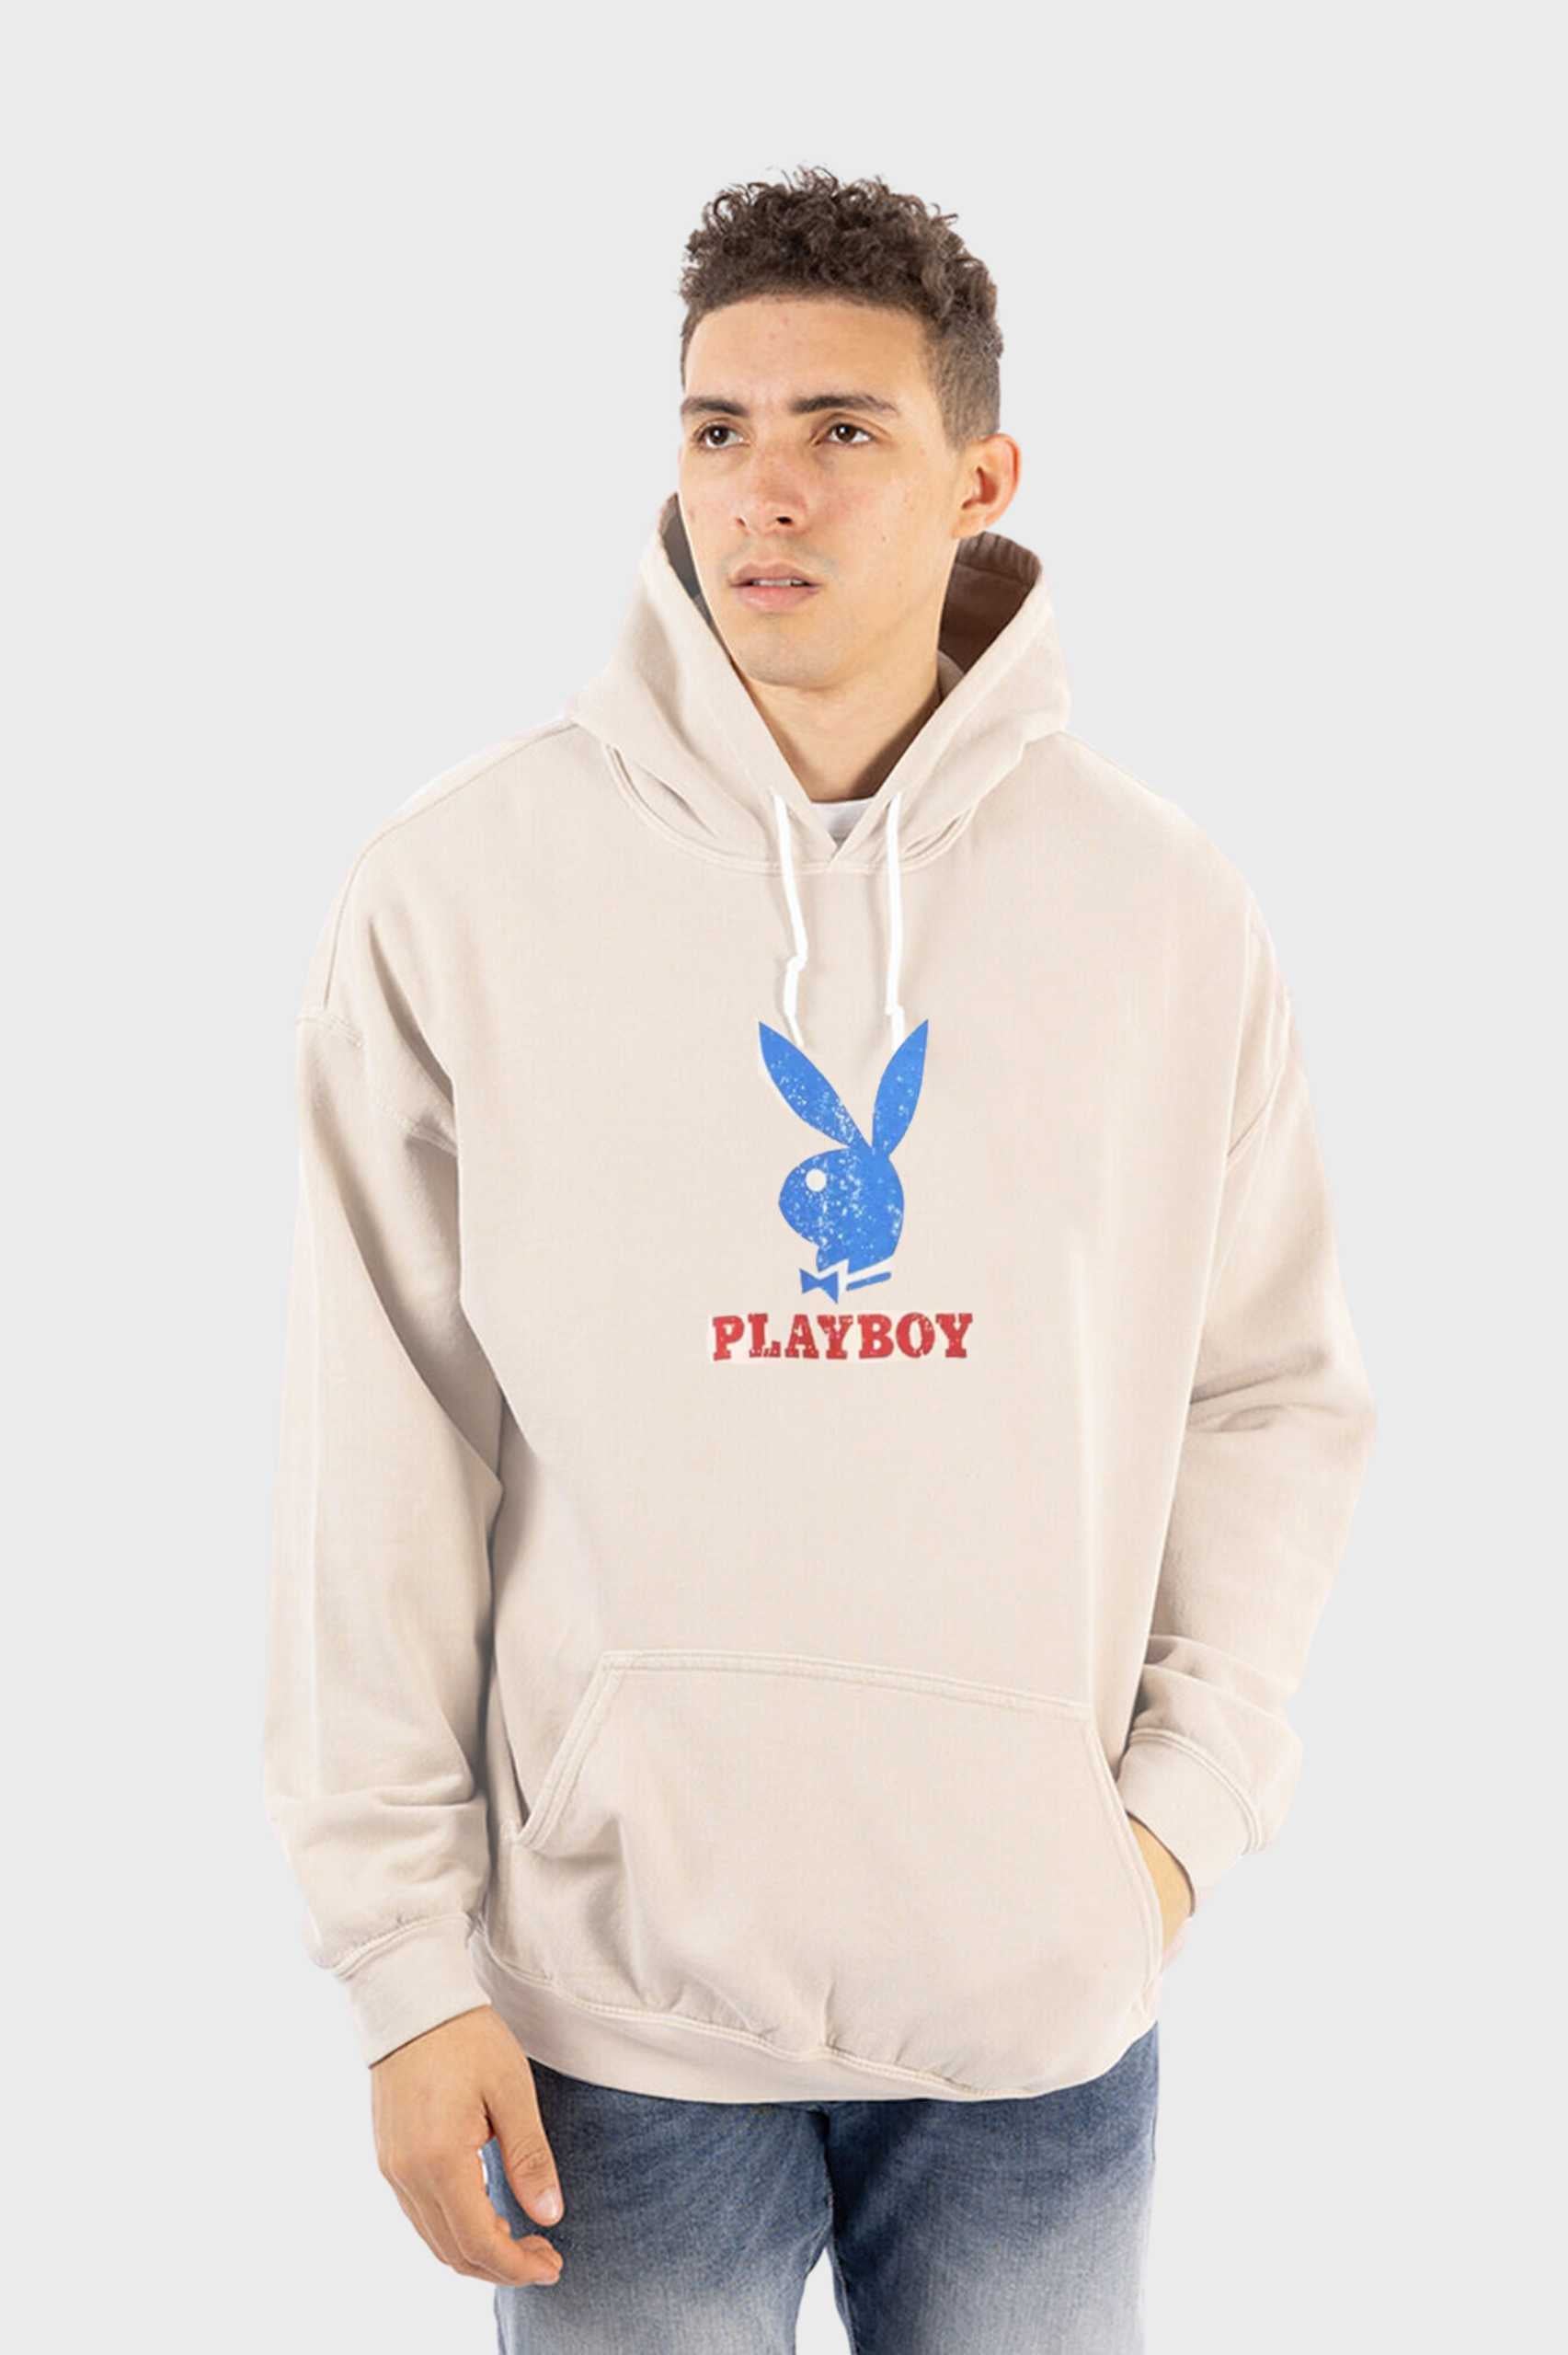 Playboy Vintage PB Classic Hoodie Unisex